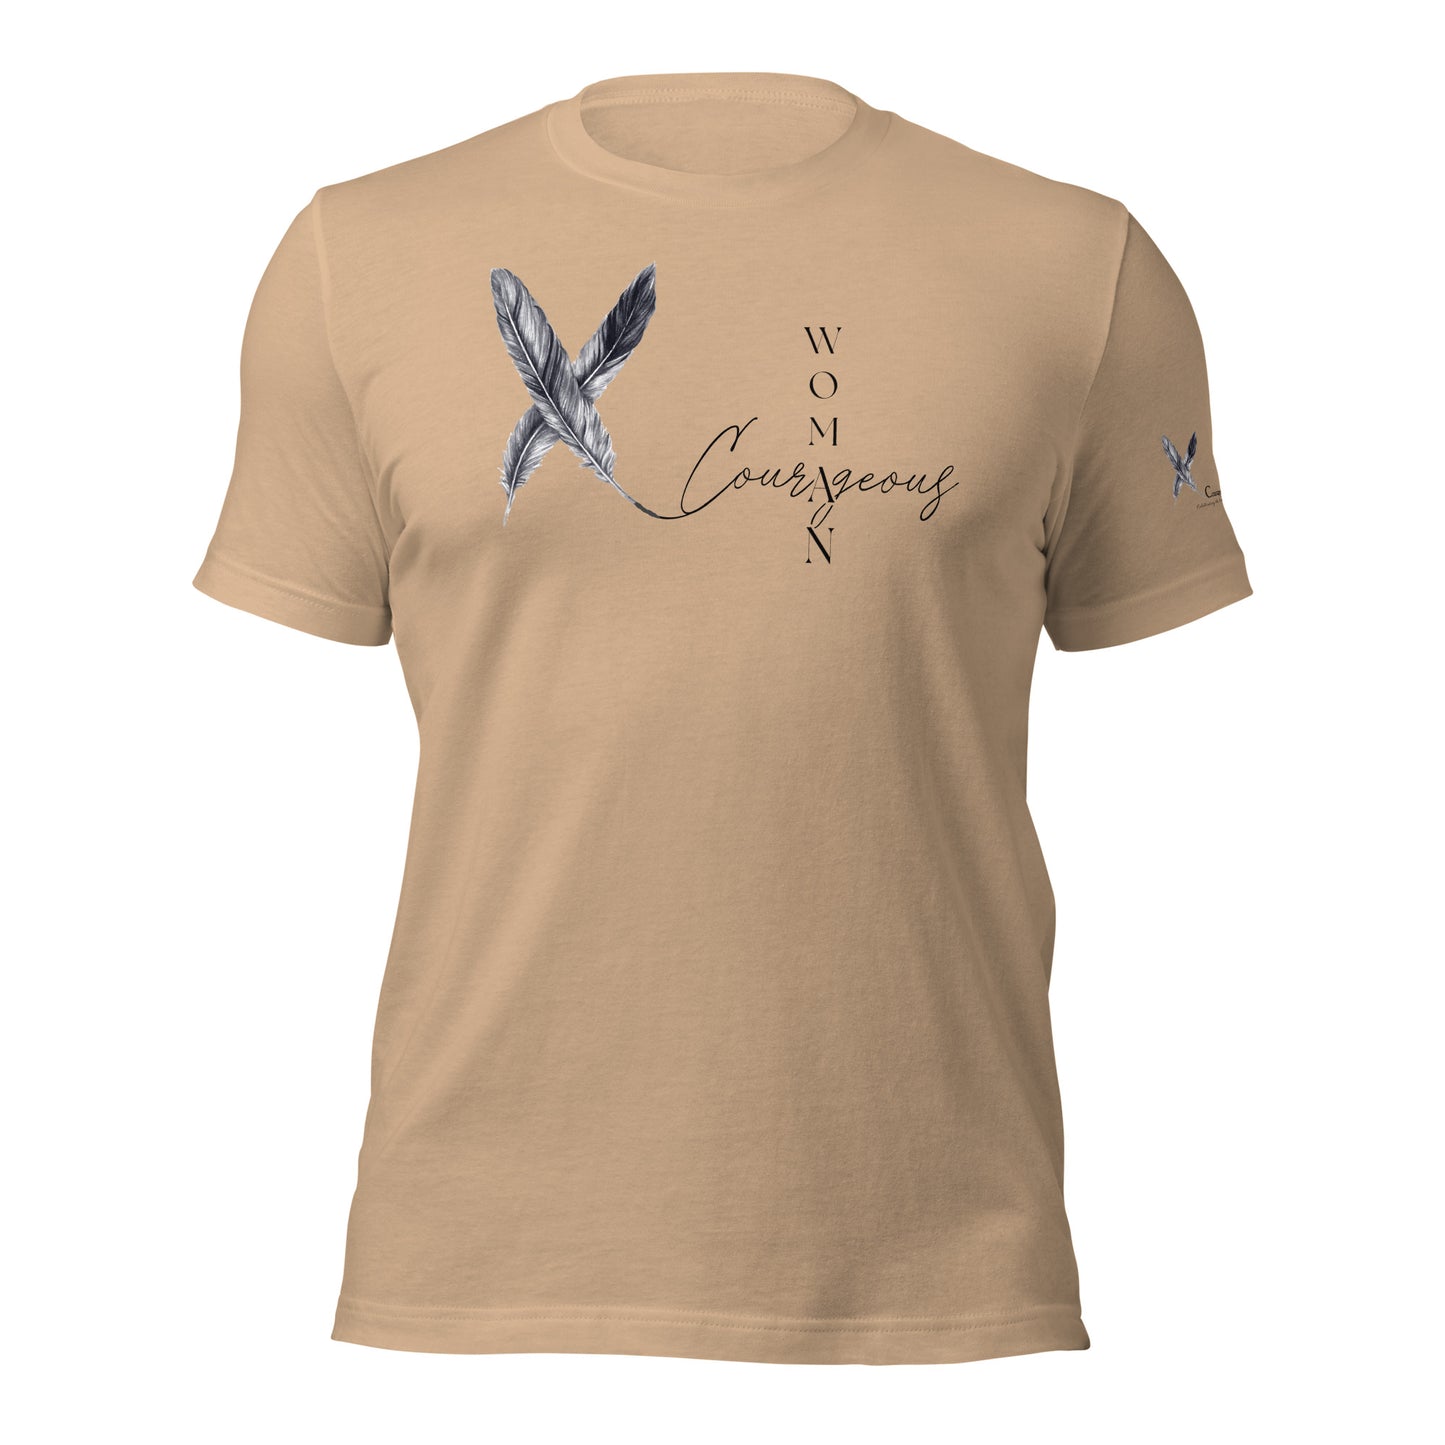 Courageous Woman Women's Empowerment T-Shirt (Black Logo)